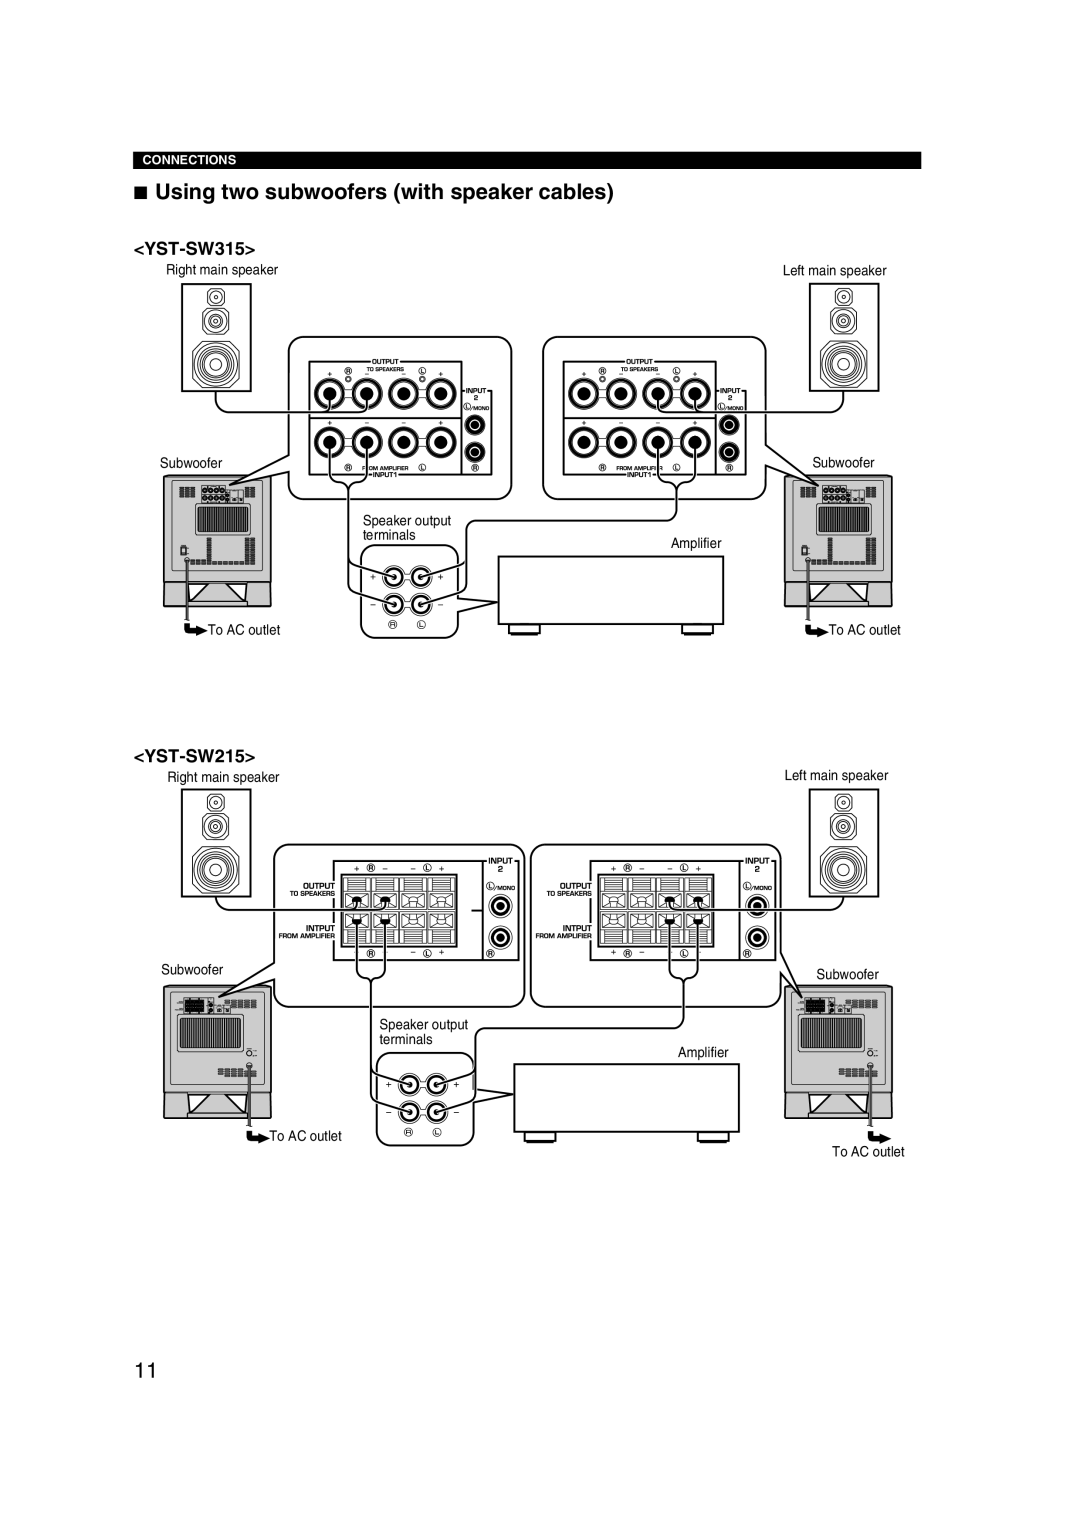 Yamaha HTR-5940 AV <YST-SW315>, <YST-SW215>, Connections, Speaker output terminals, Left main speaker, Subwoofer 